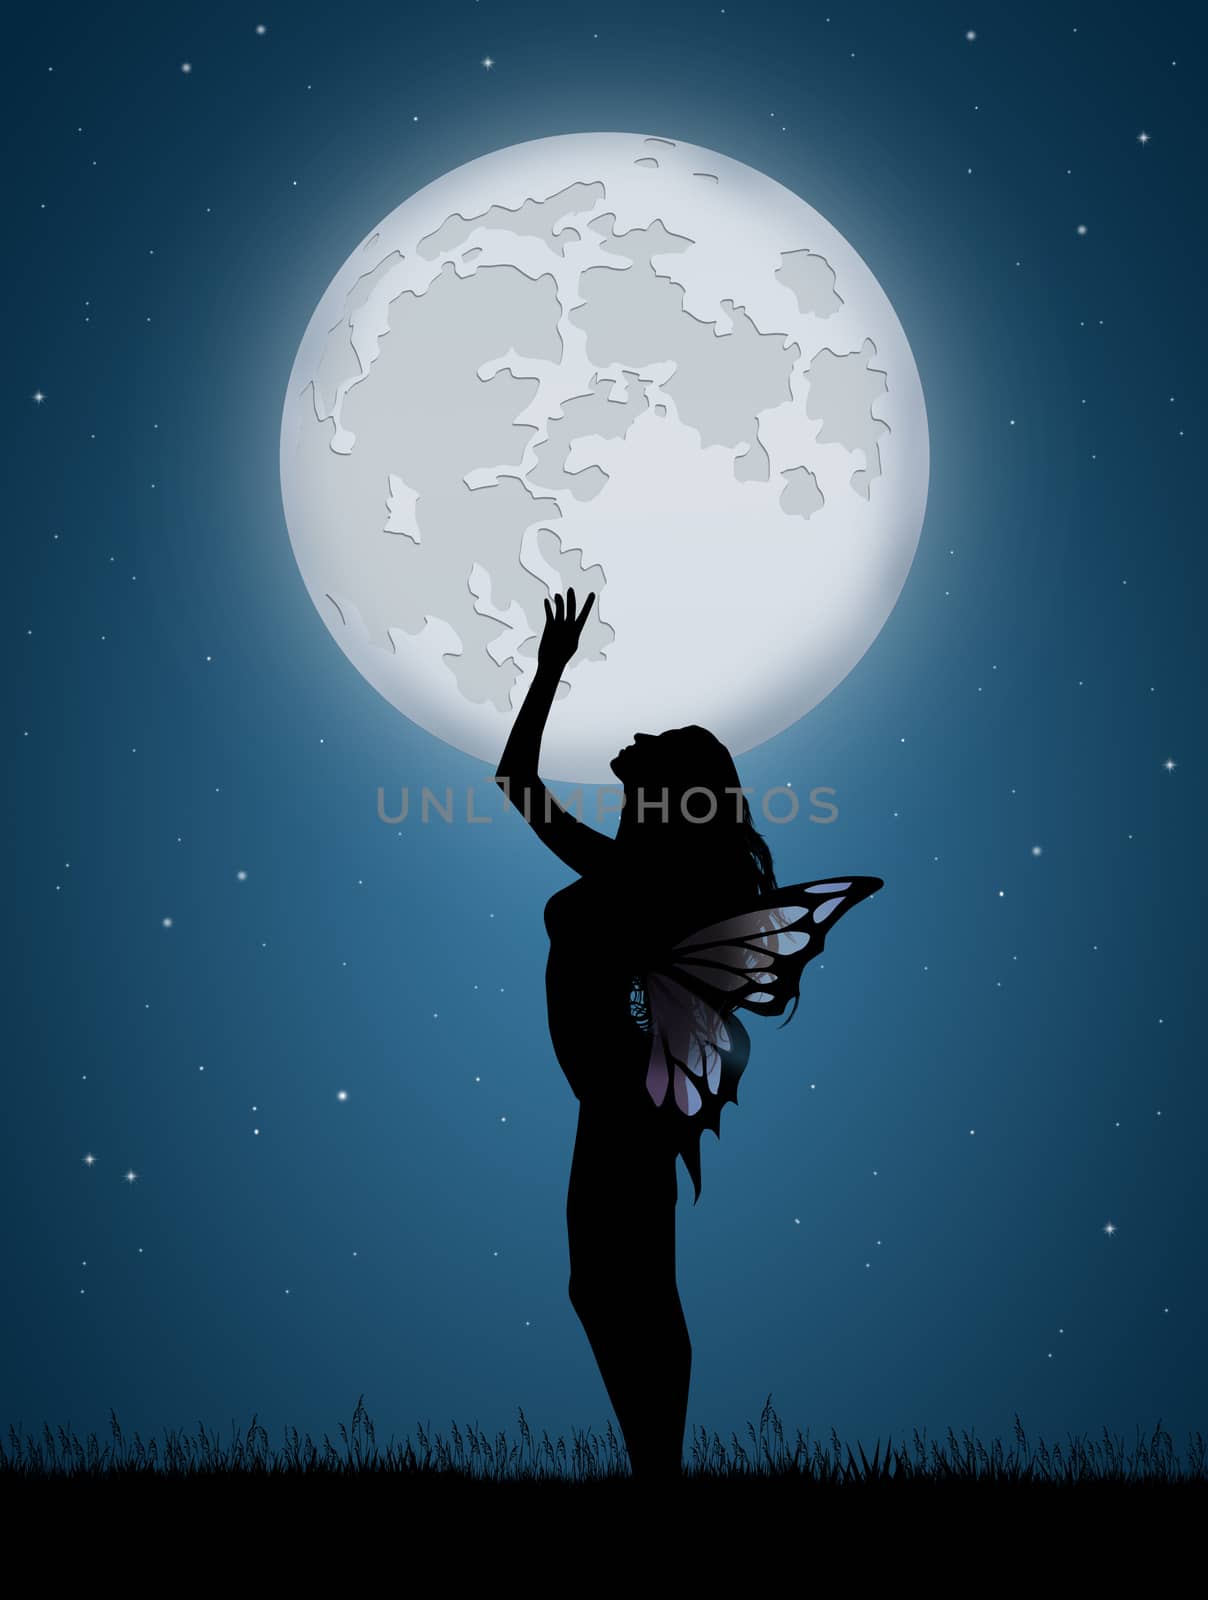 illustration of fairy in the moonlight